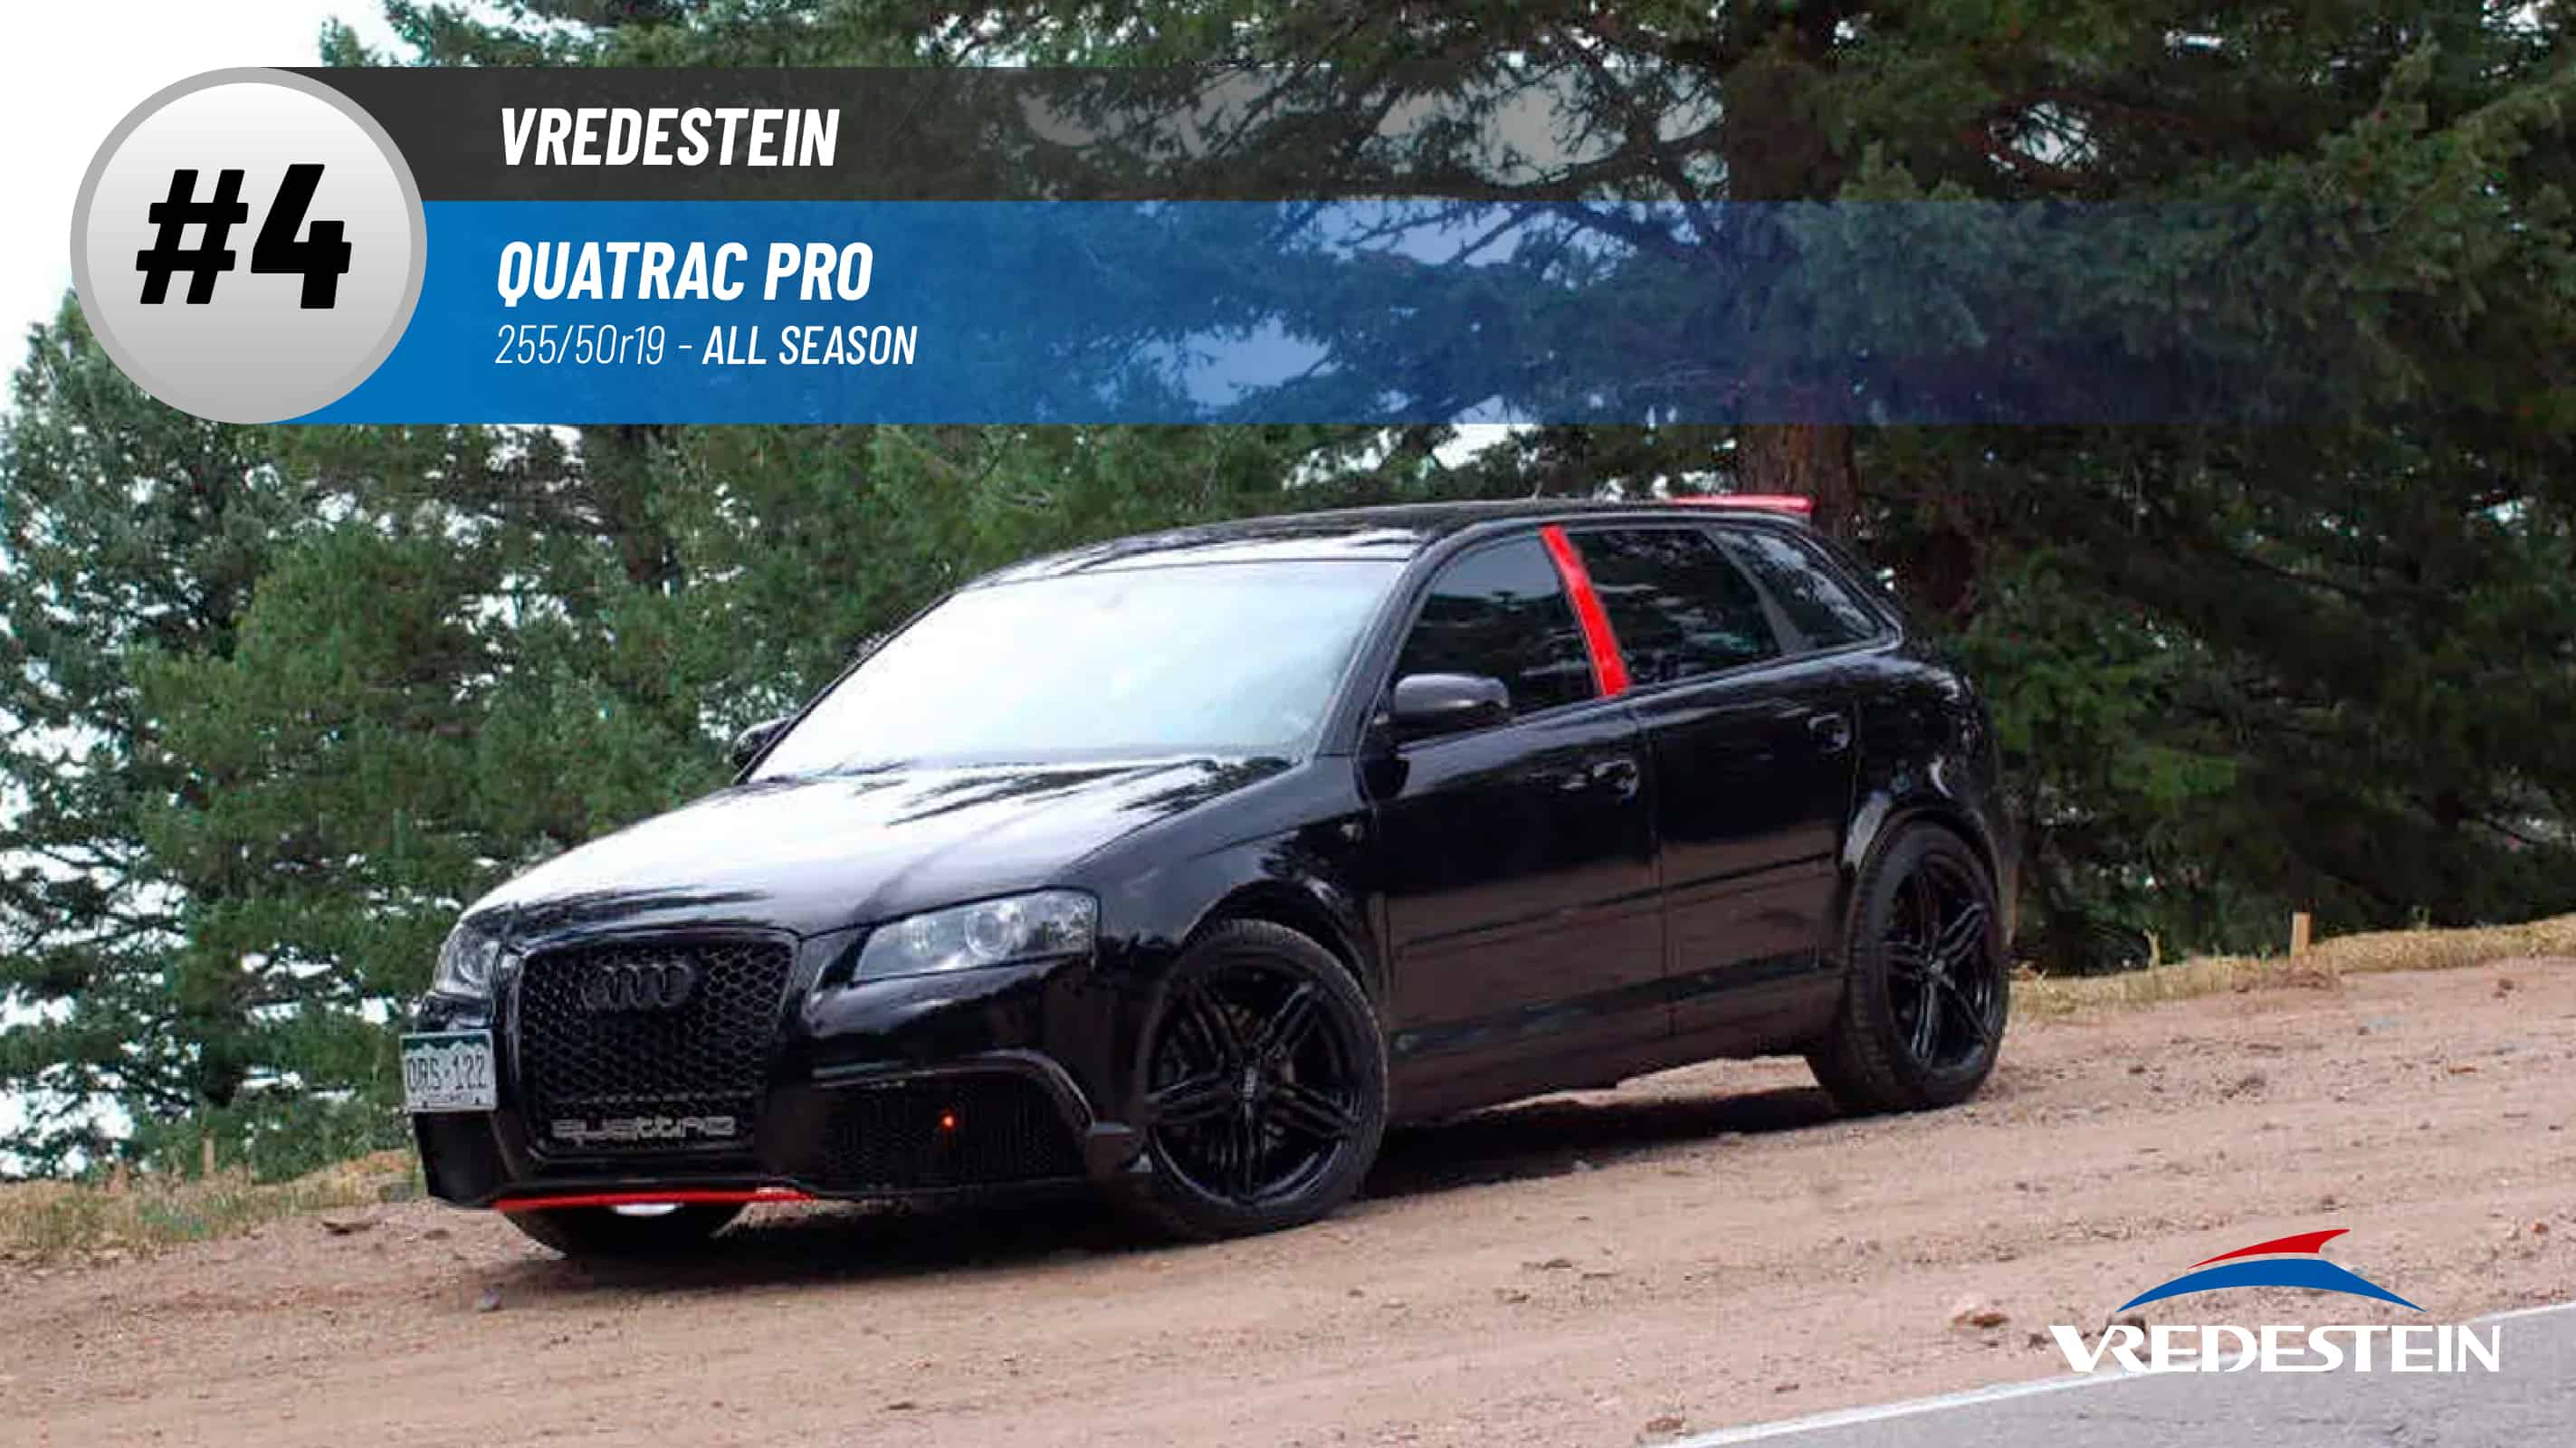 Top #4 All Season Tires: Vredestein Quatrac Pro – best 255/50r19